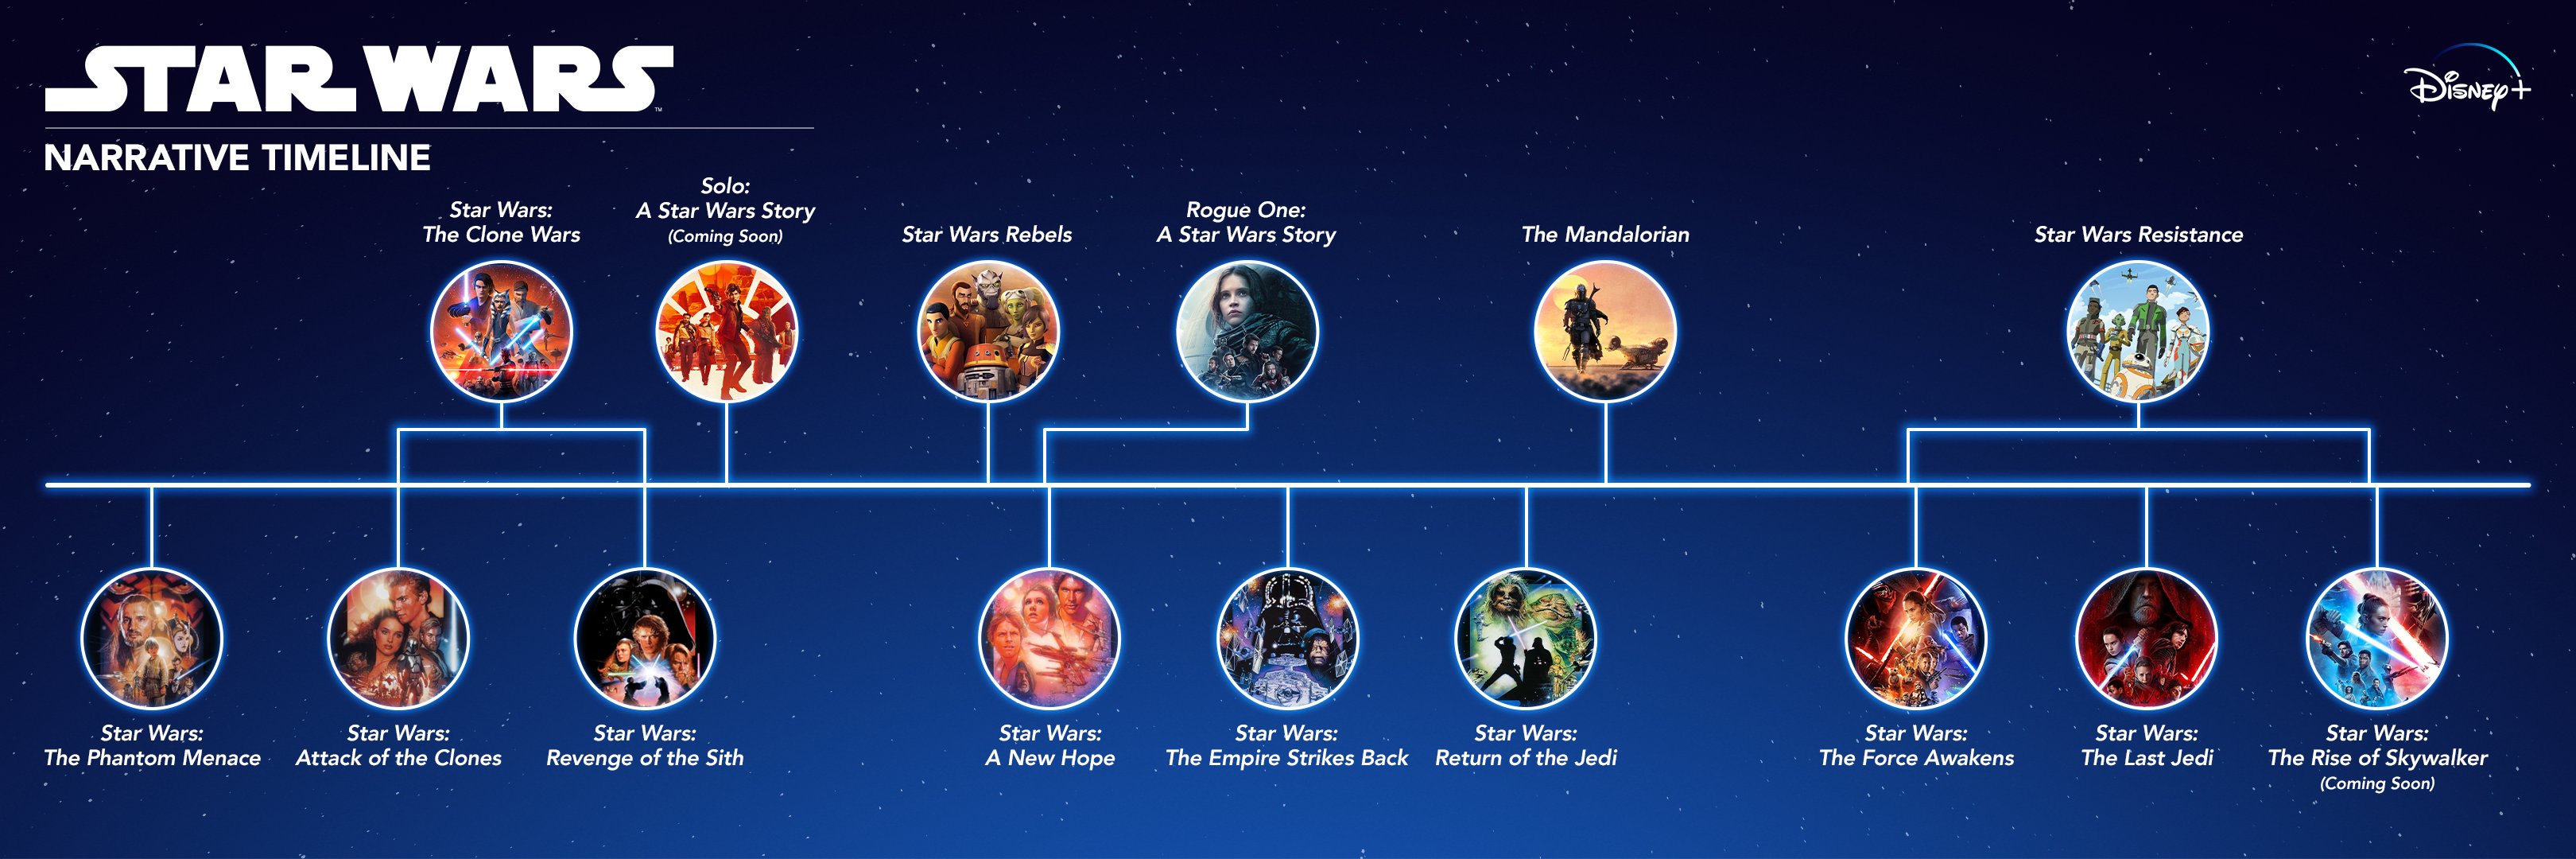 Star Wars Infographic